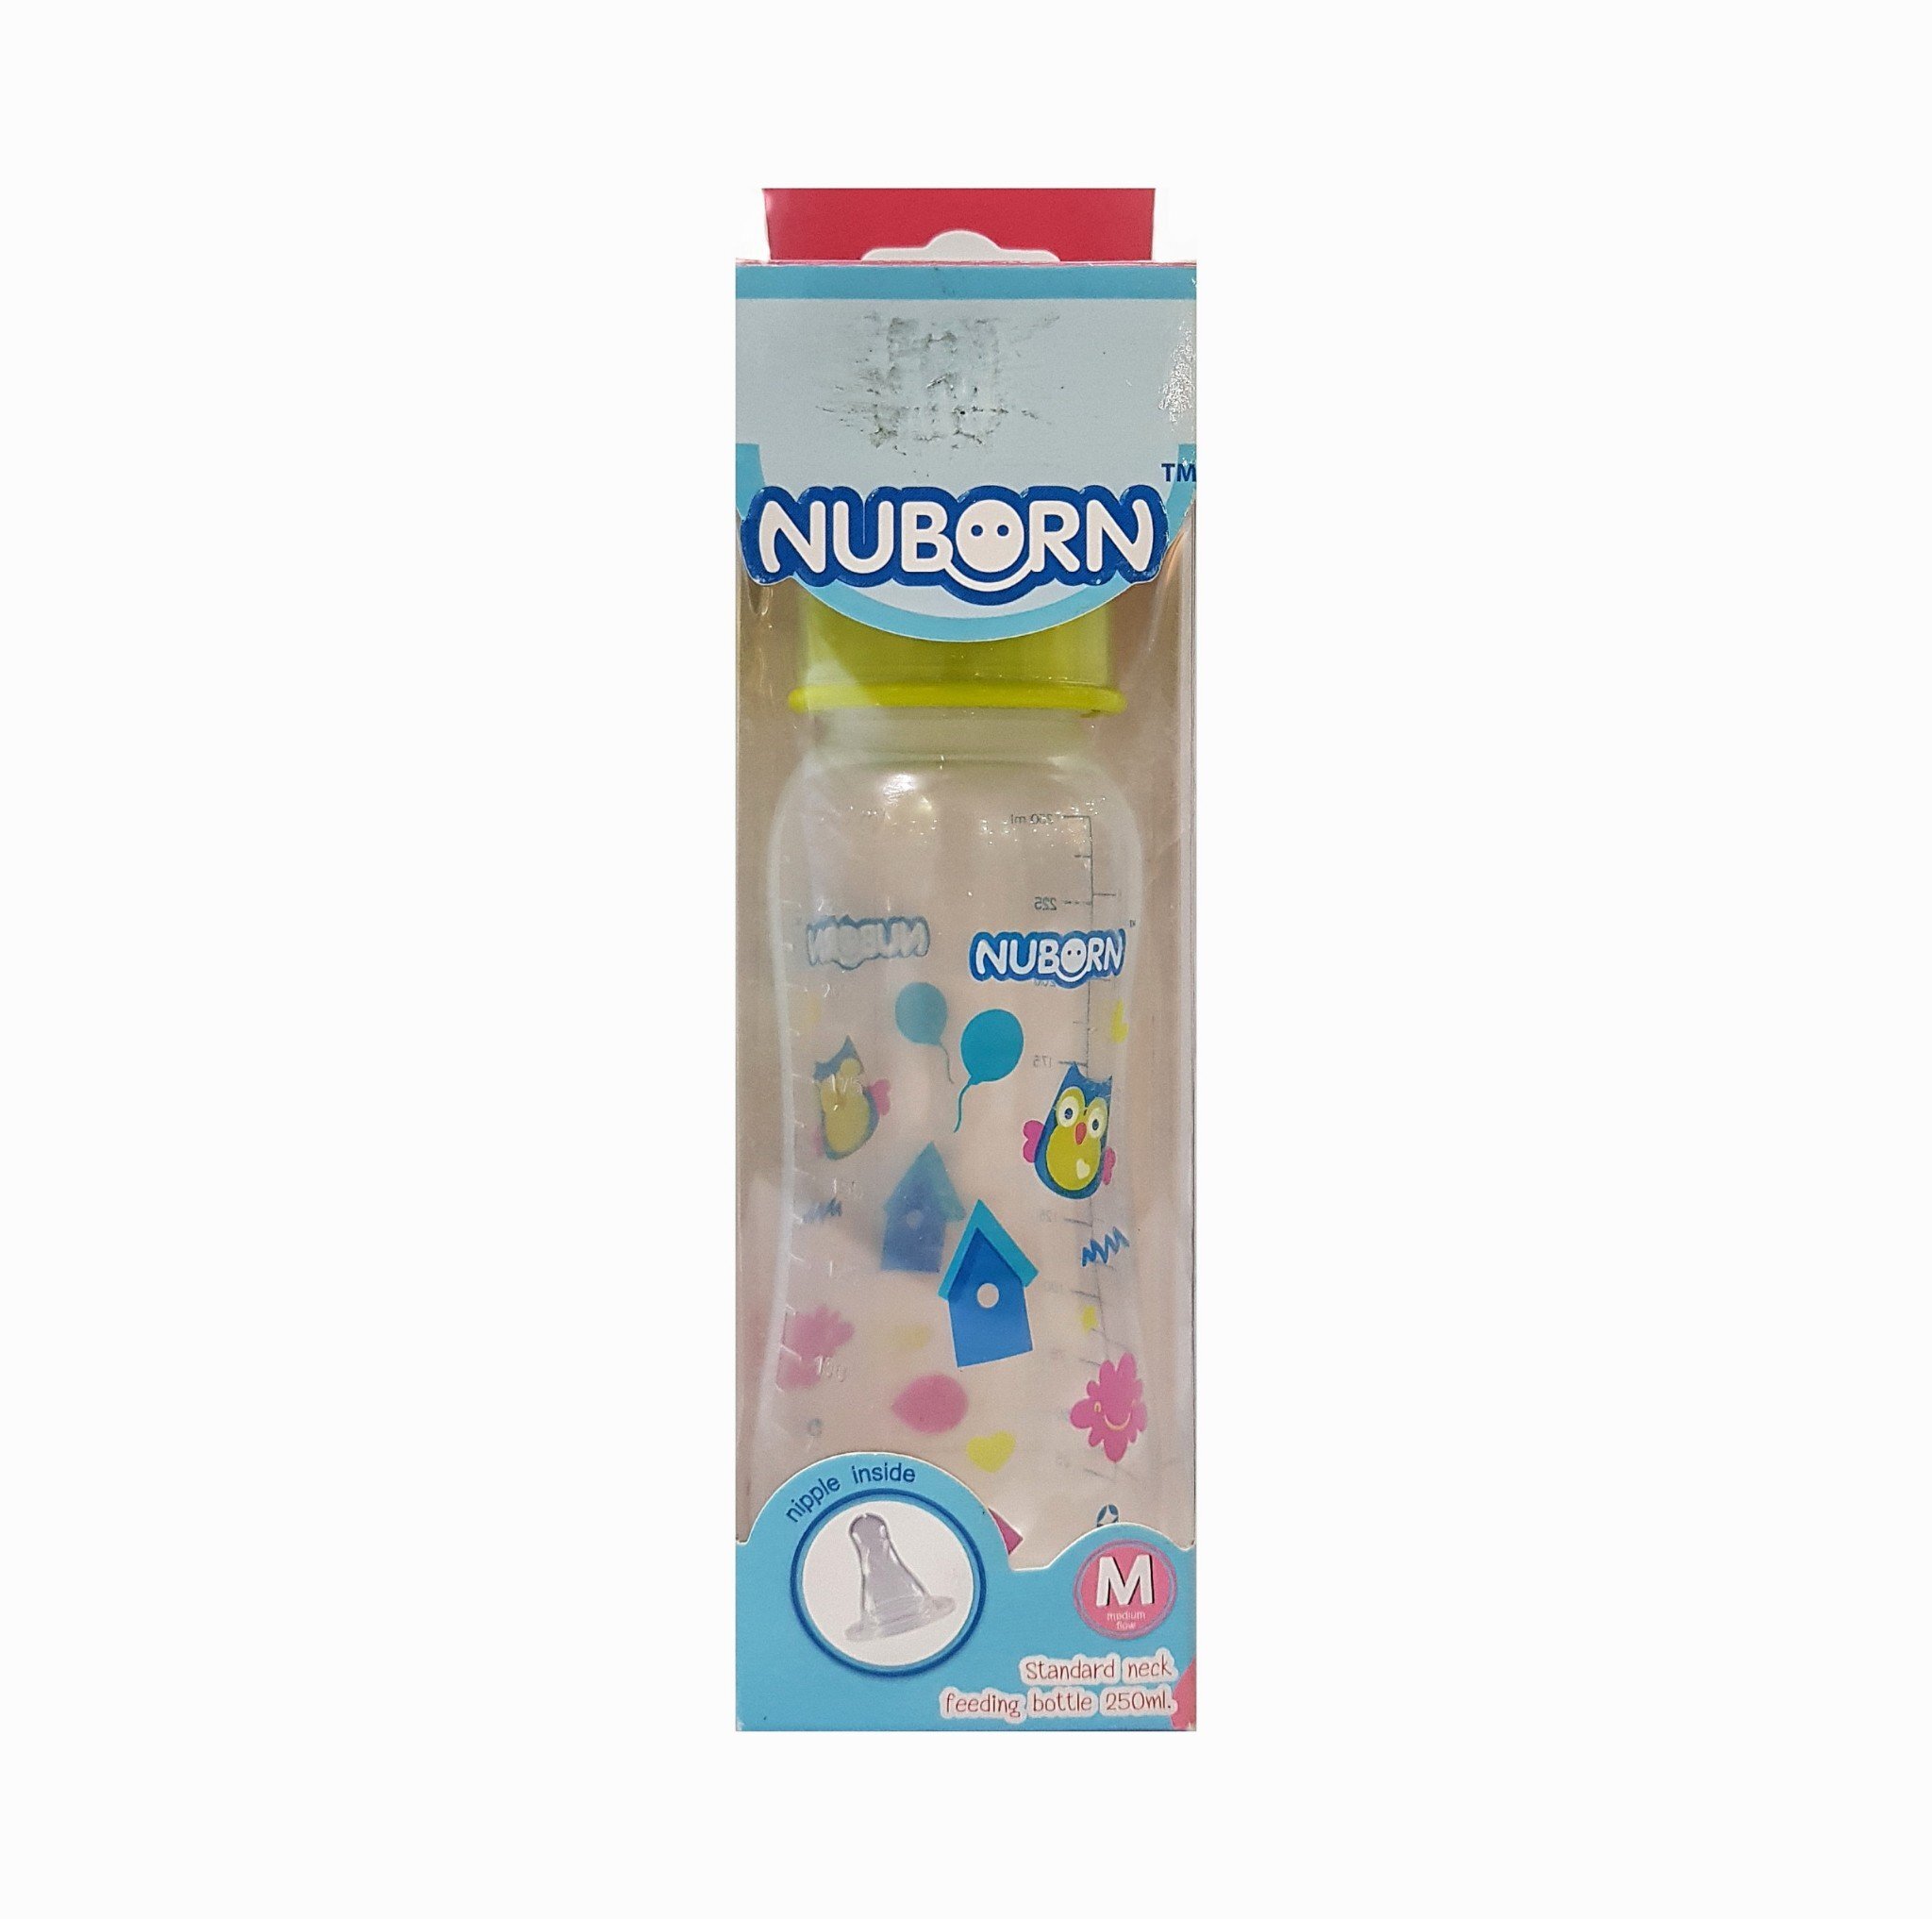 Bình sữa cổ hẹp Nuborn VT2003 - 250ml